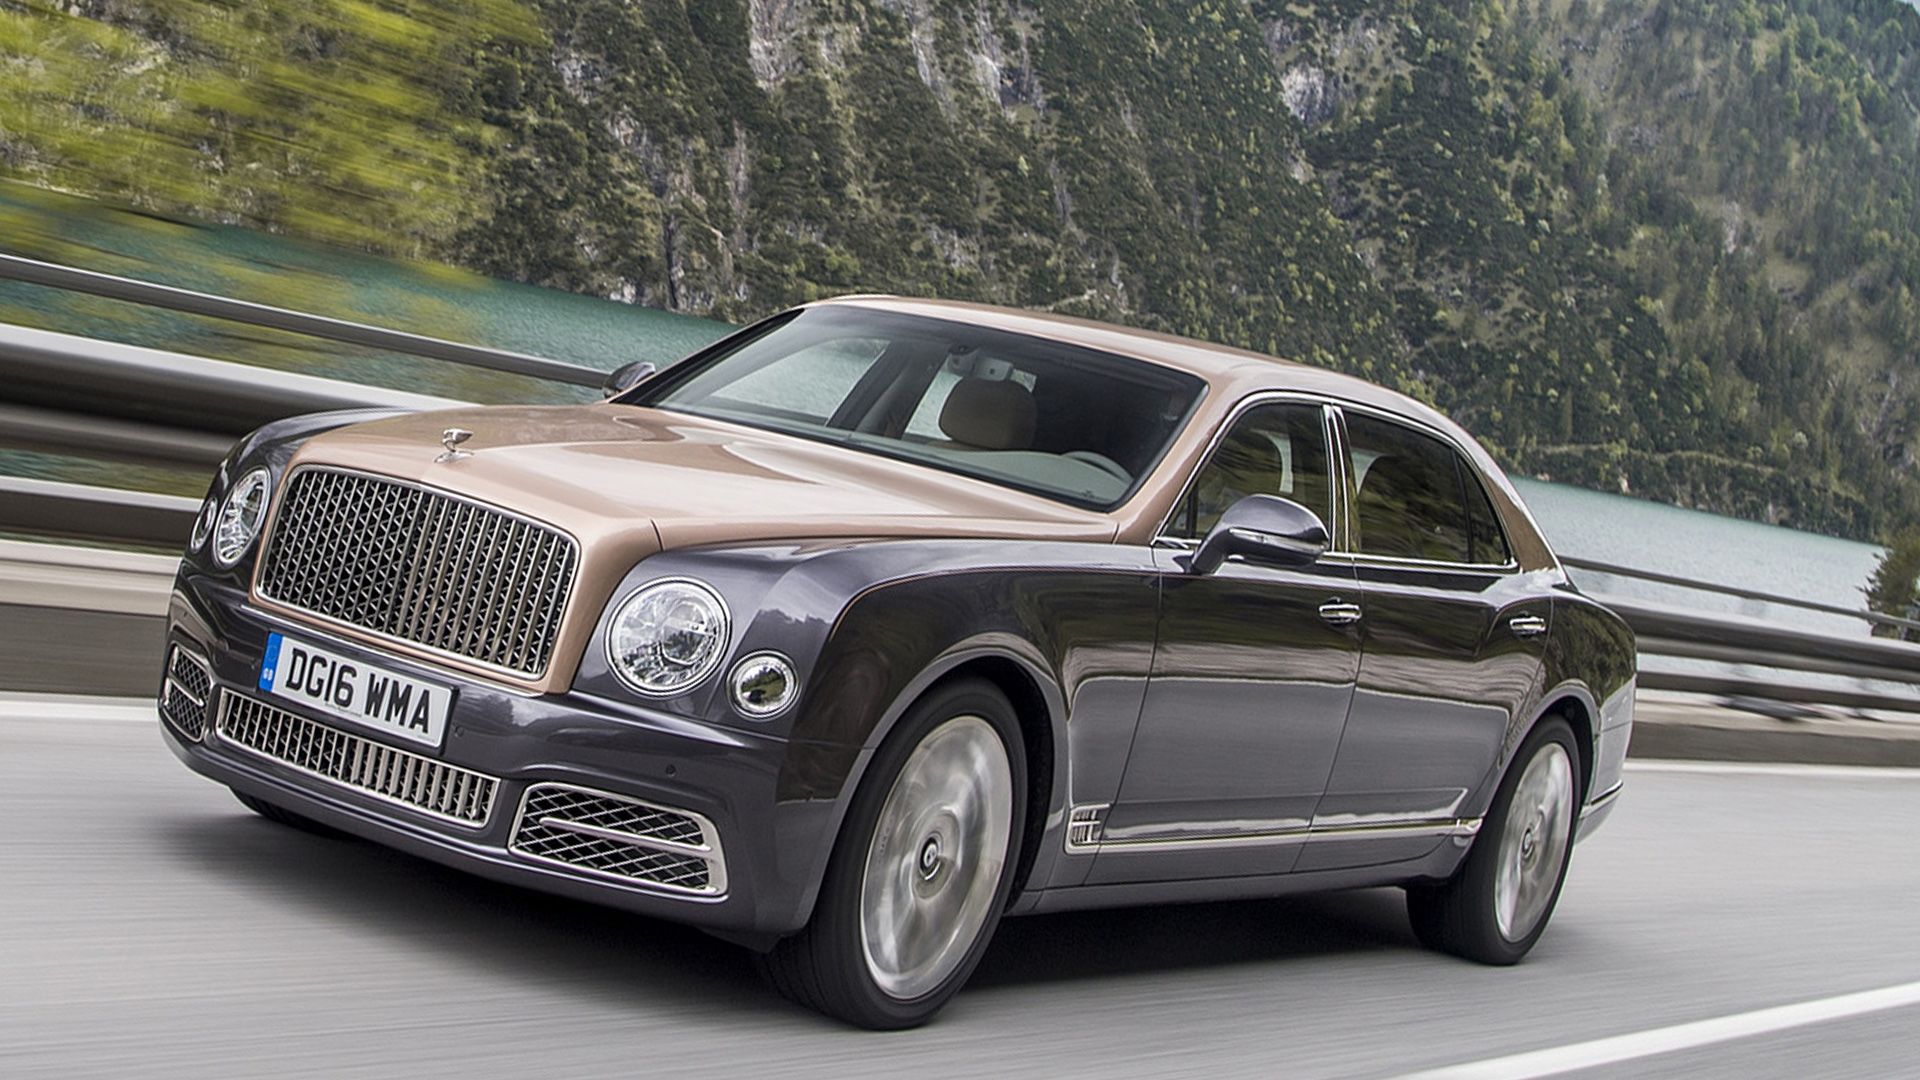 2019 Bentley Mulsanne Price | Bentley mulsanne, Bentley, Bentley car